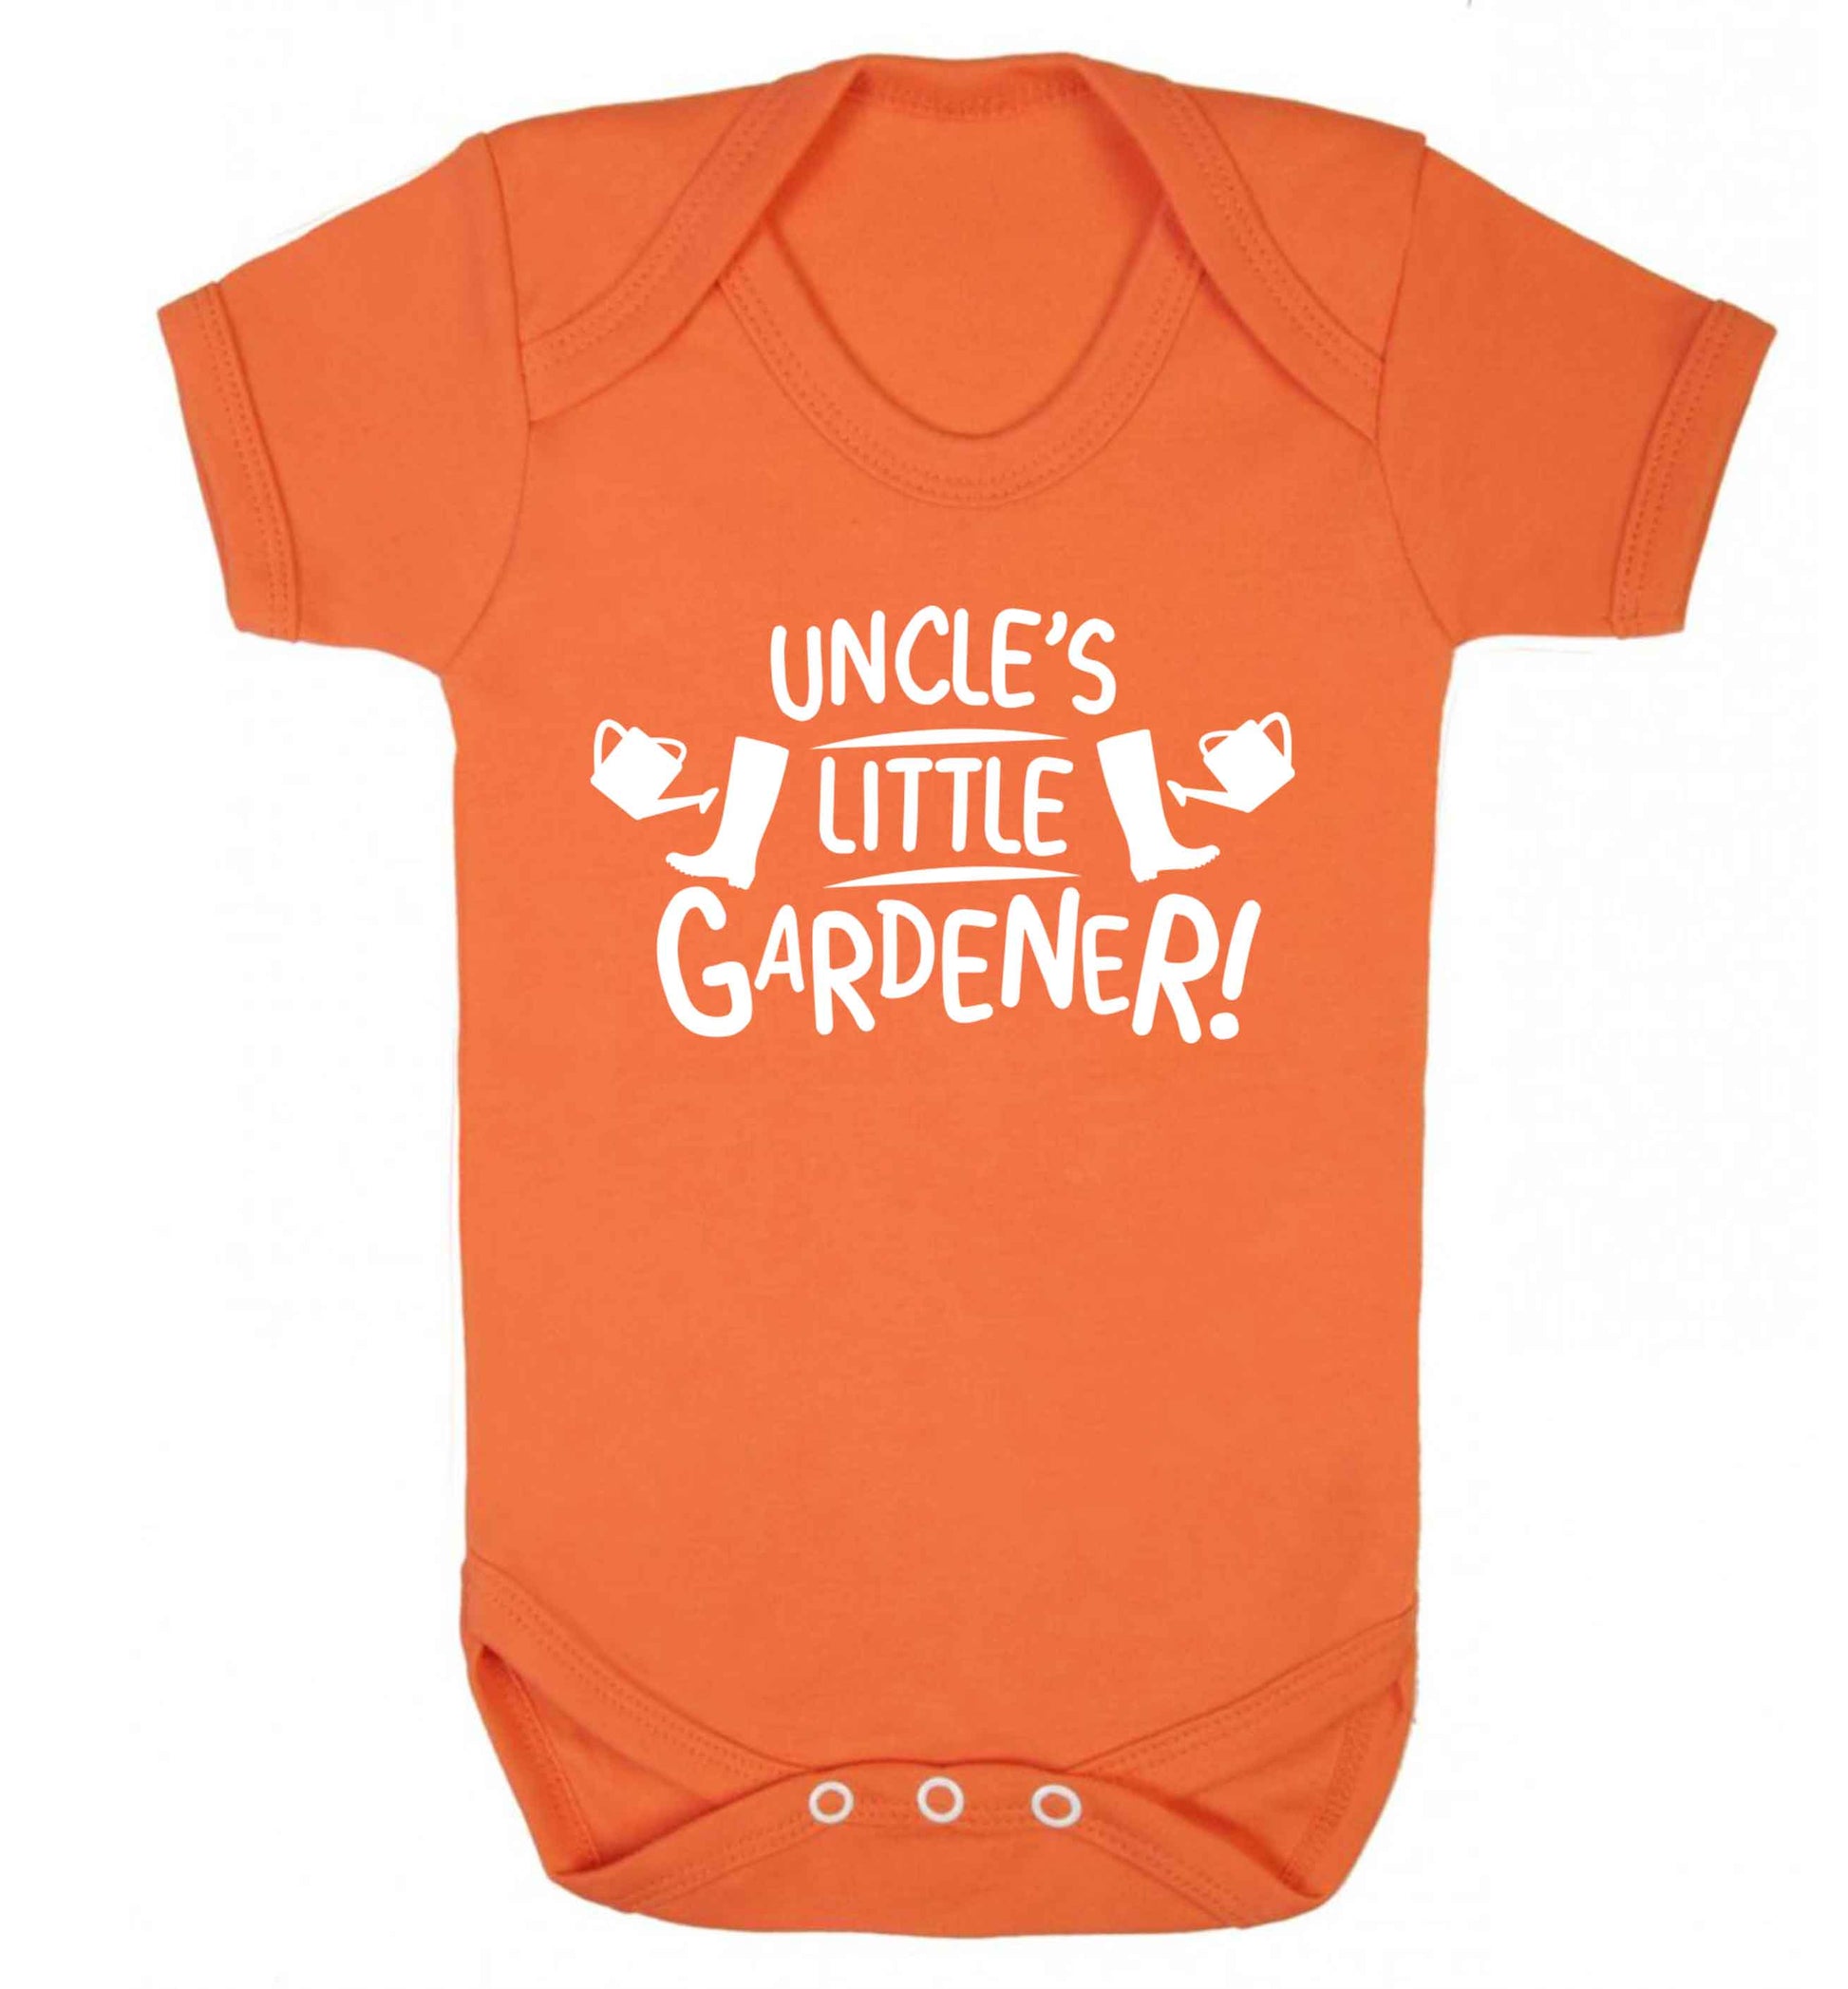 Uncle's little gardener Baby Vest orange 18-24 months